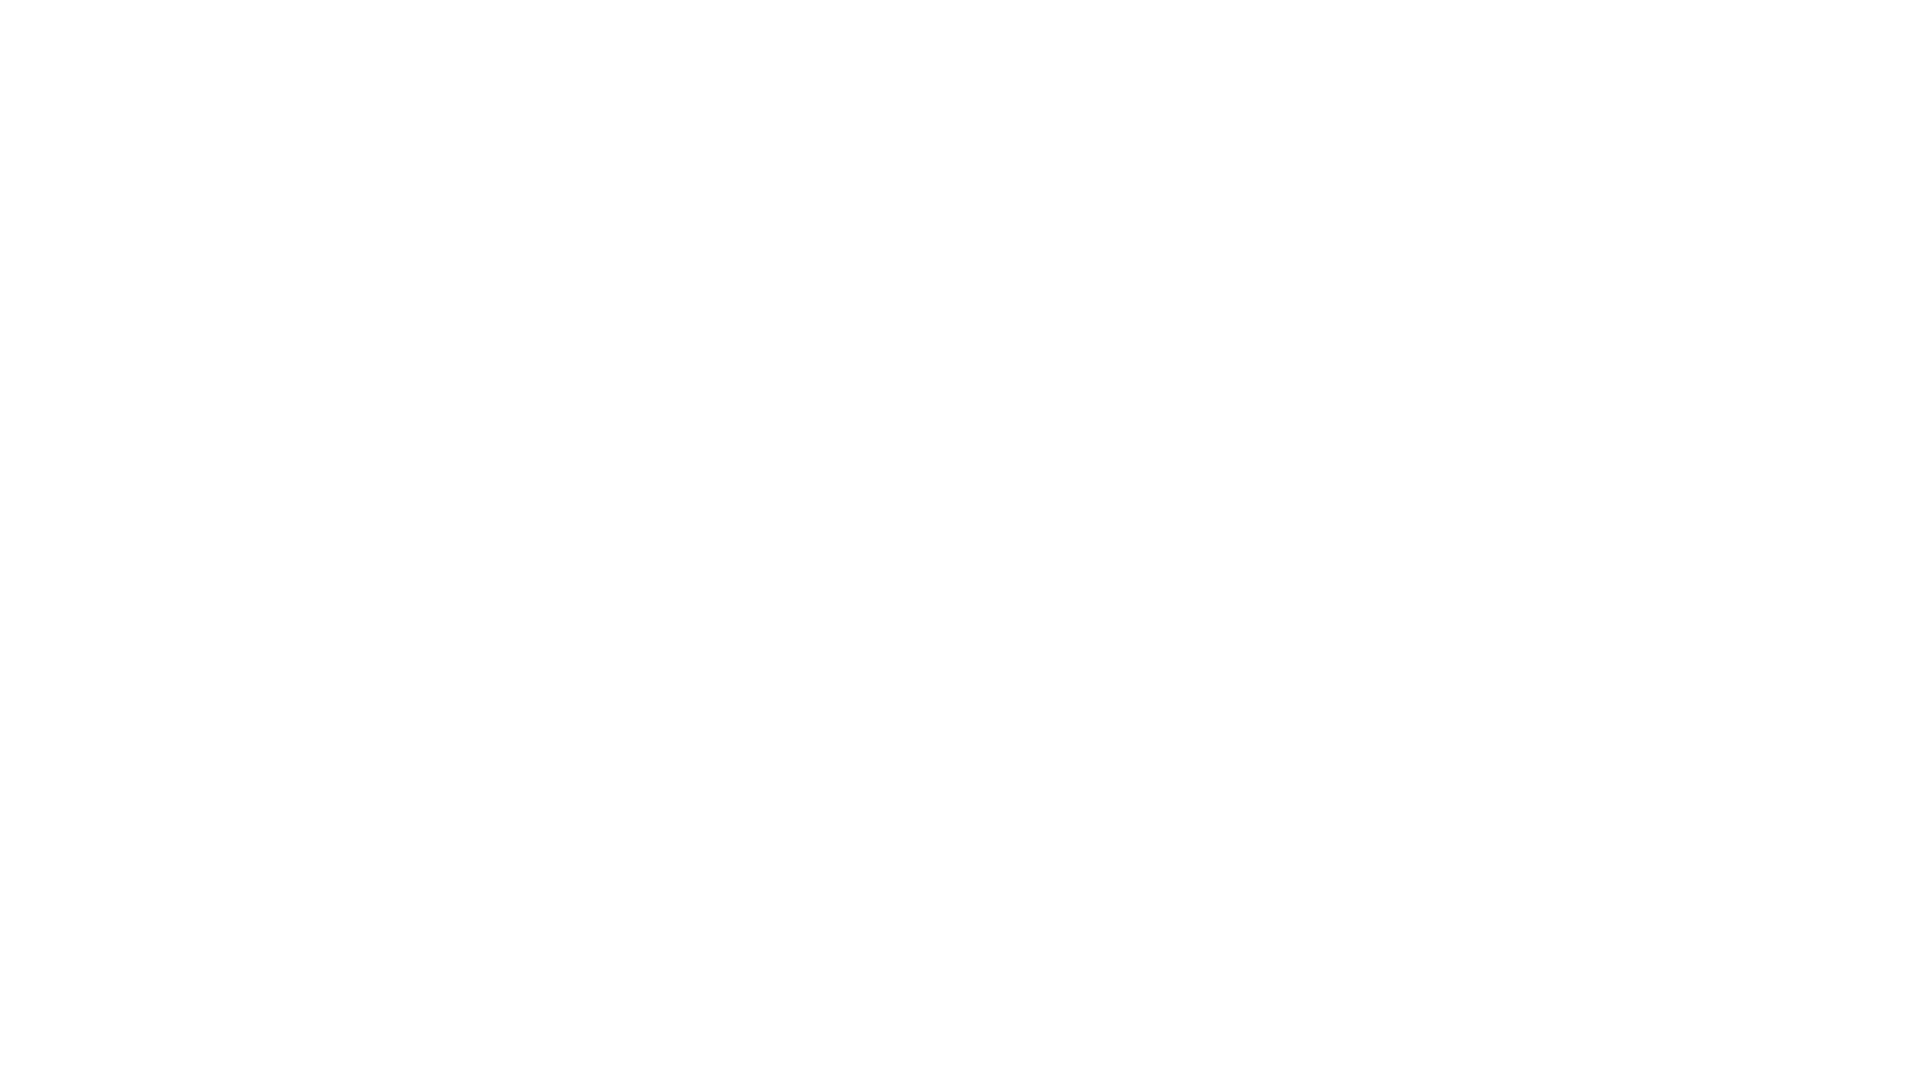 LocalSpa/Salon_MidLogo